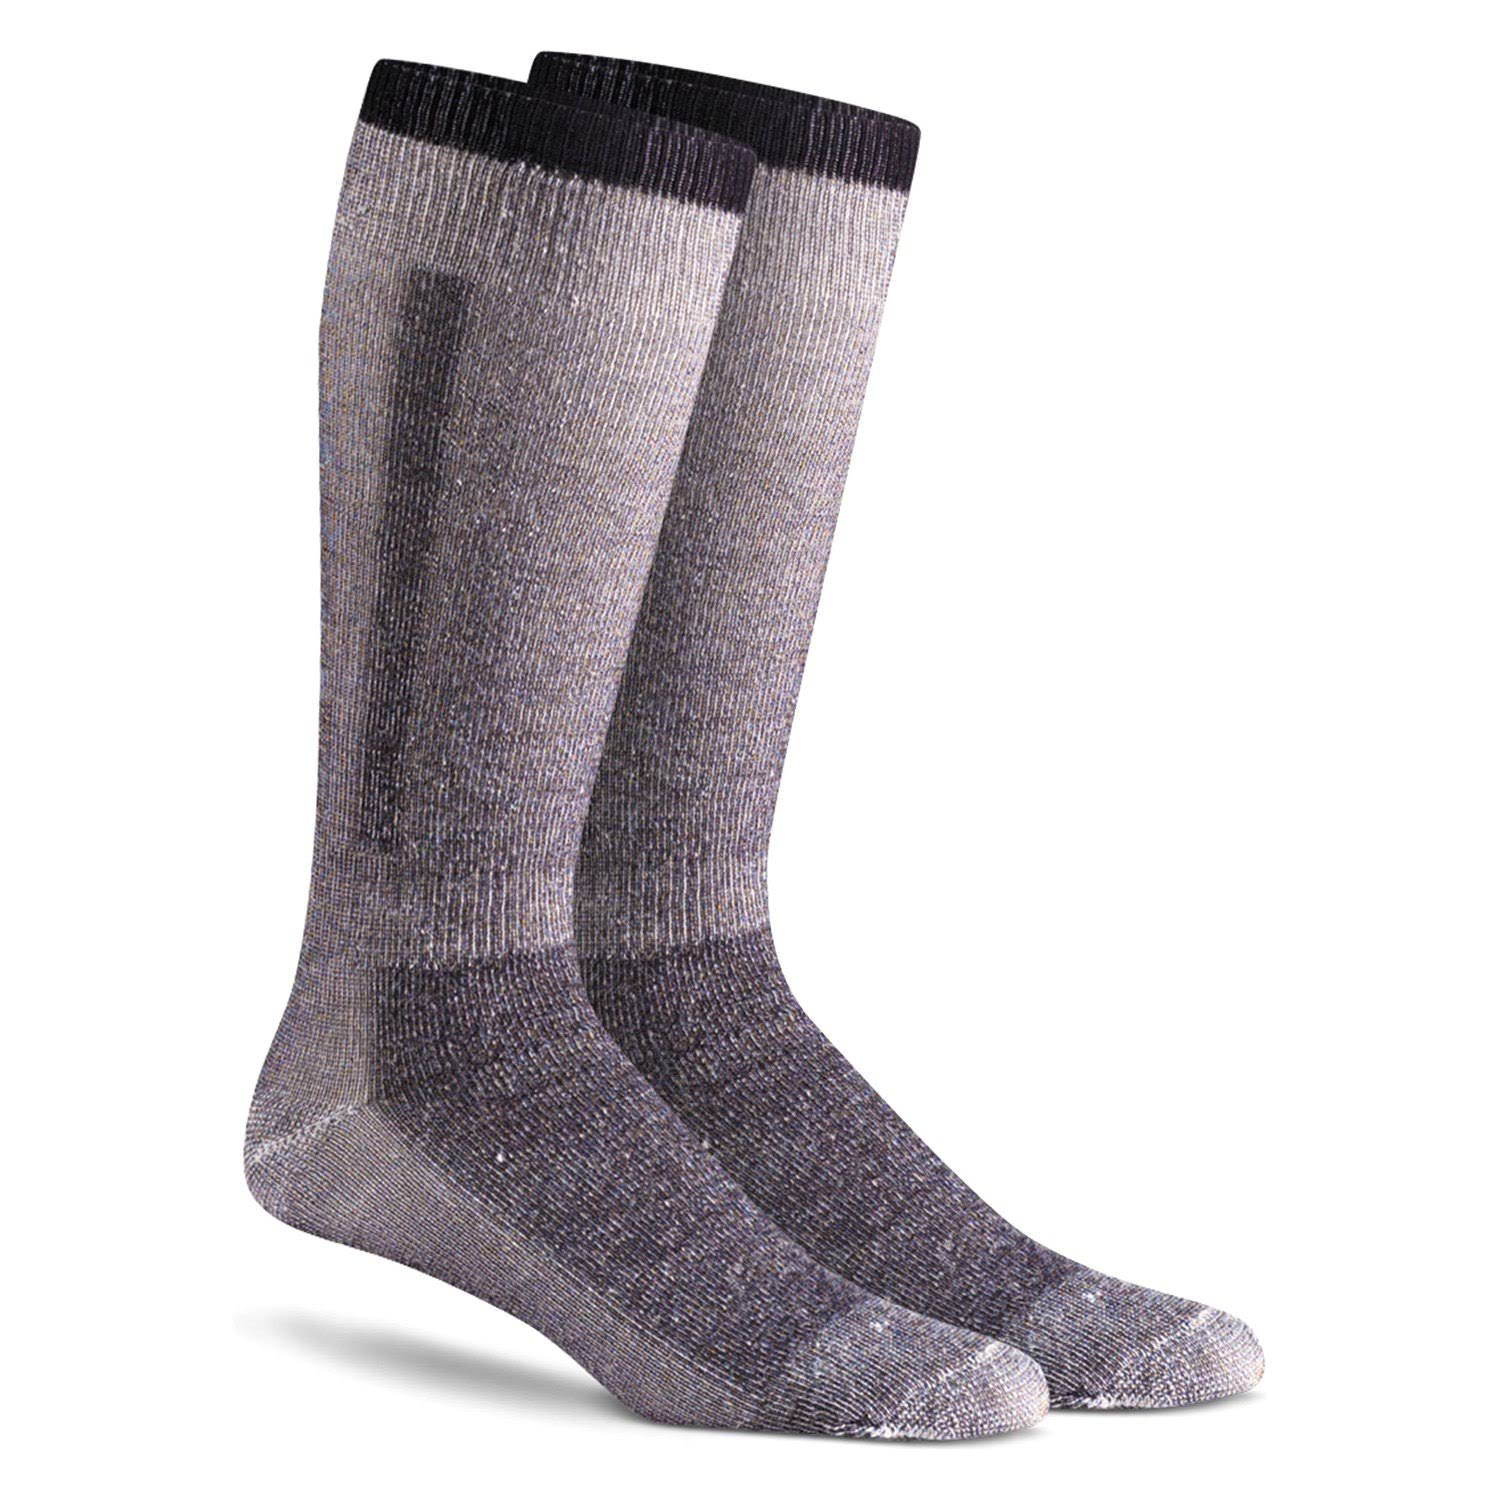 Fox River Snow Pack Over-The-Calf Merino Wool Socks - Black, Medium